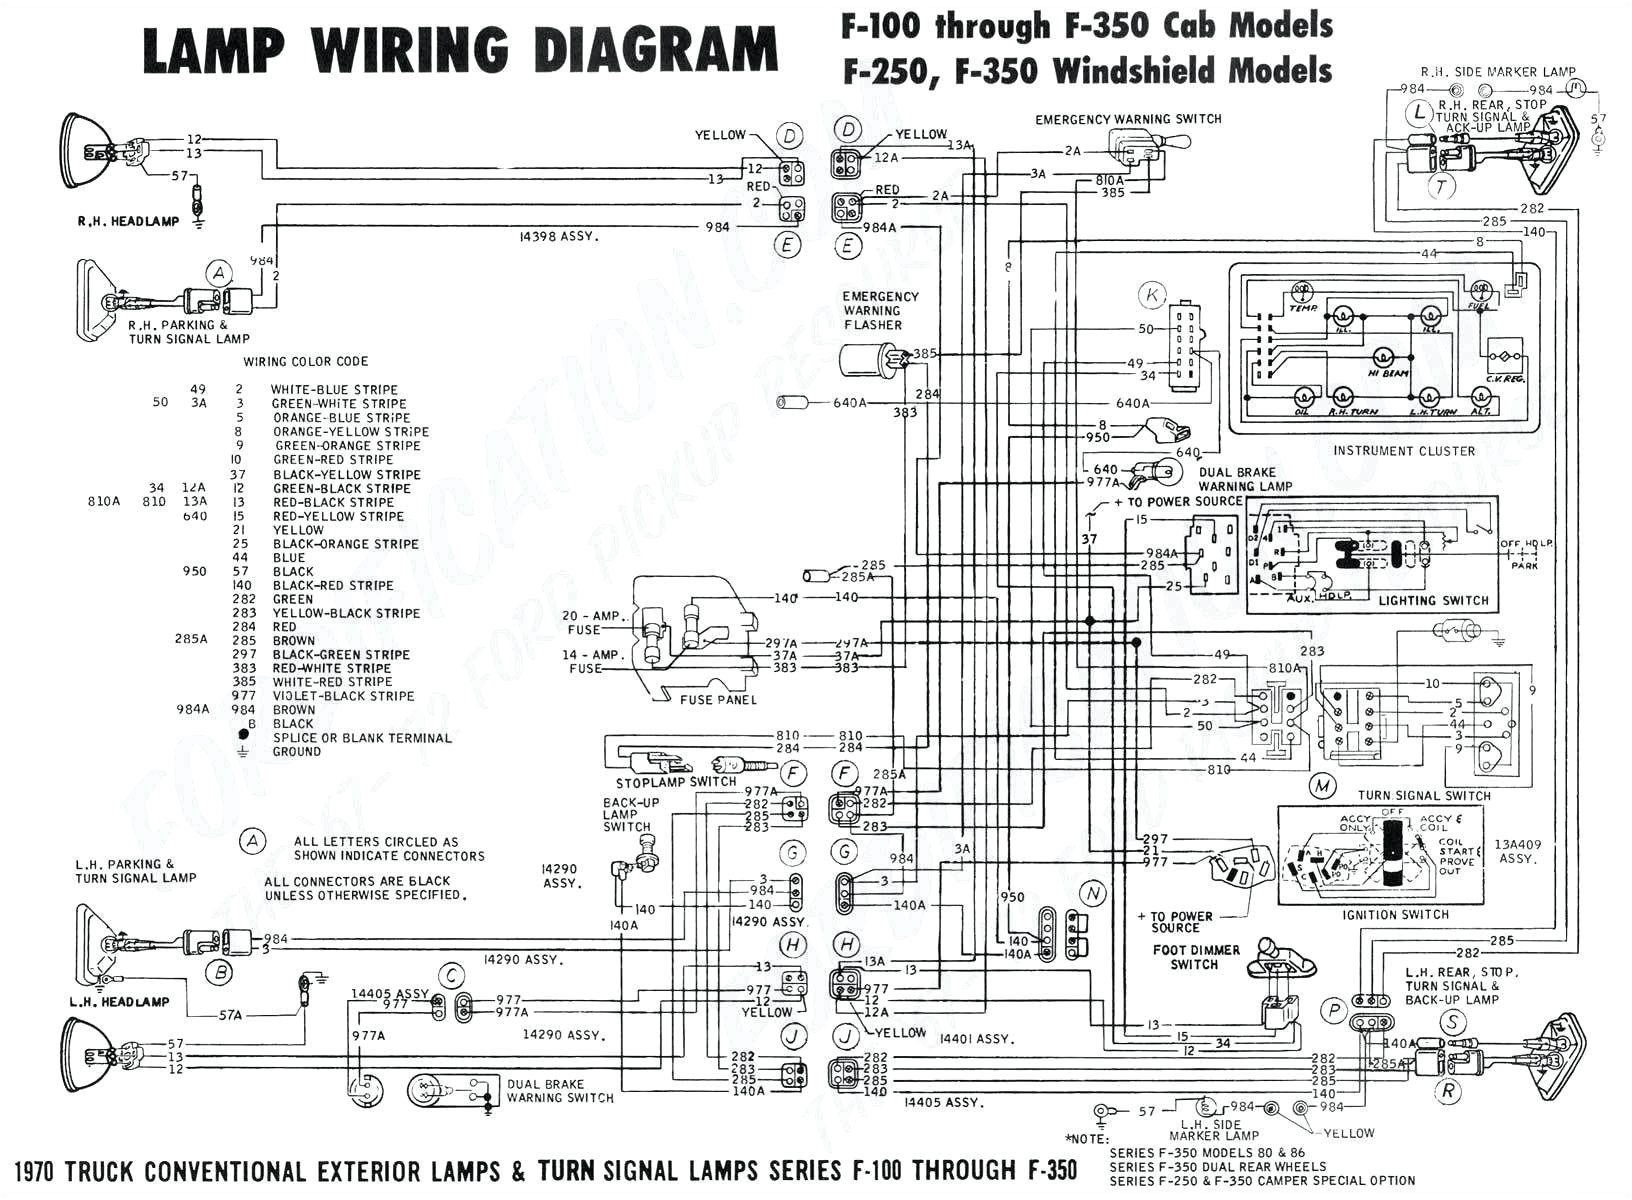 1989 chrysler lebaron power steering diagram wiring wiring diagram 1985 chrysler lebaron wiring diagram